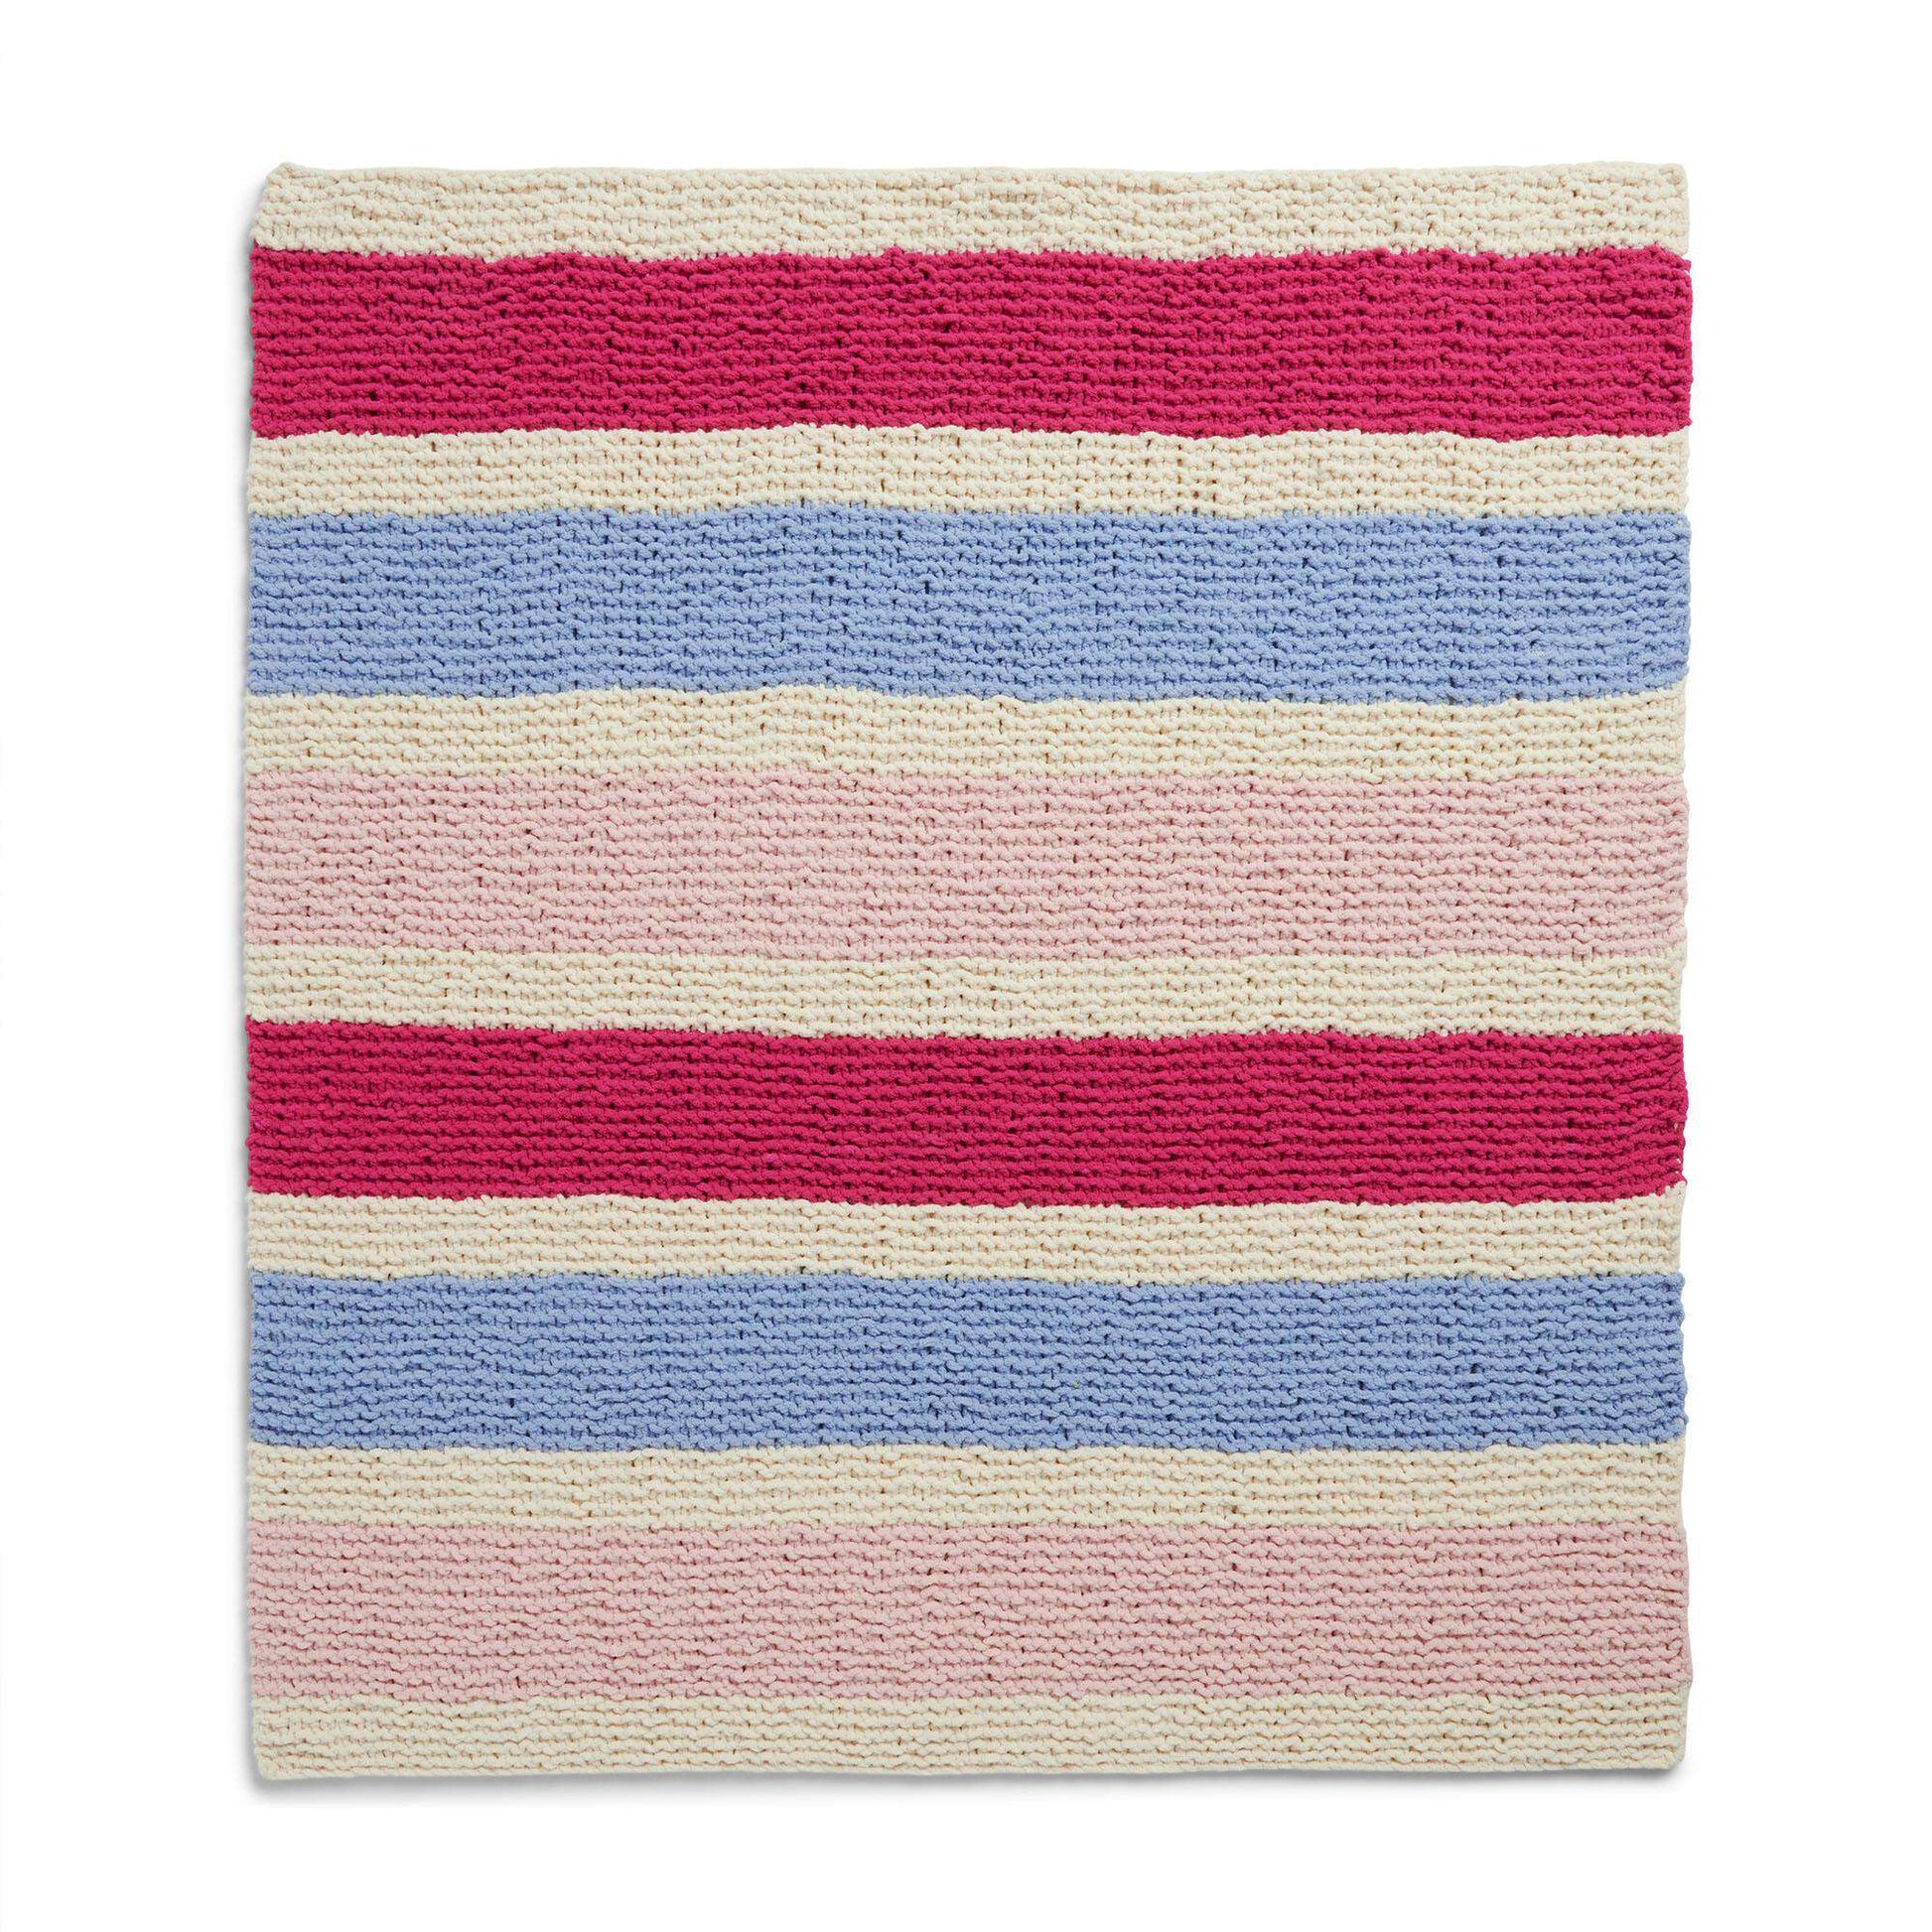 Free Bernat Snuggly Stripes Garter Knit Blanket Pattern